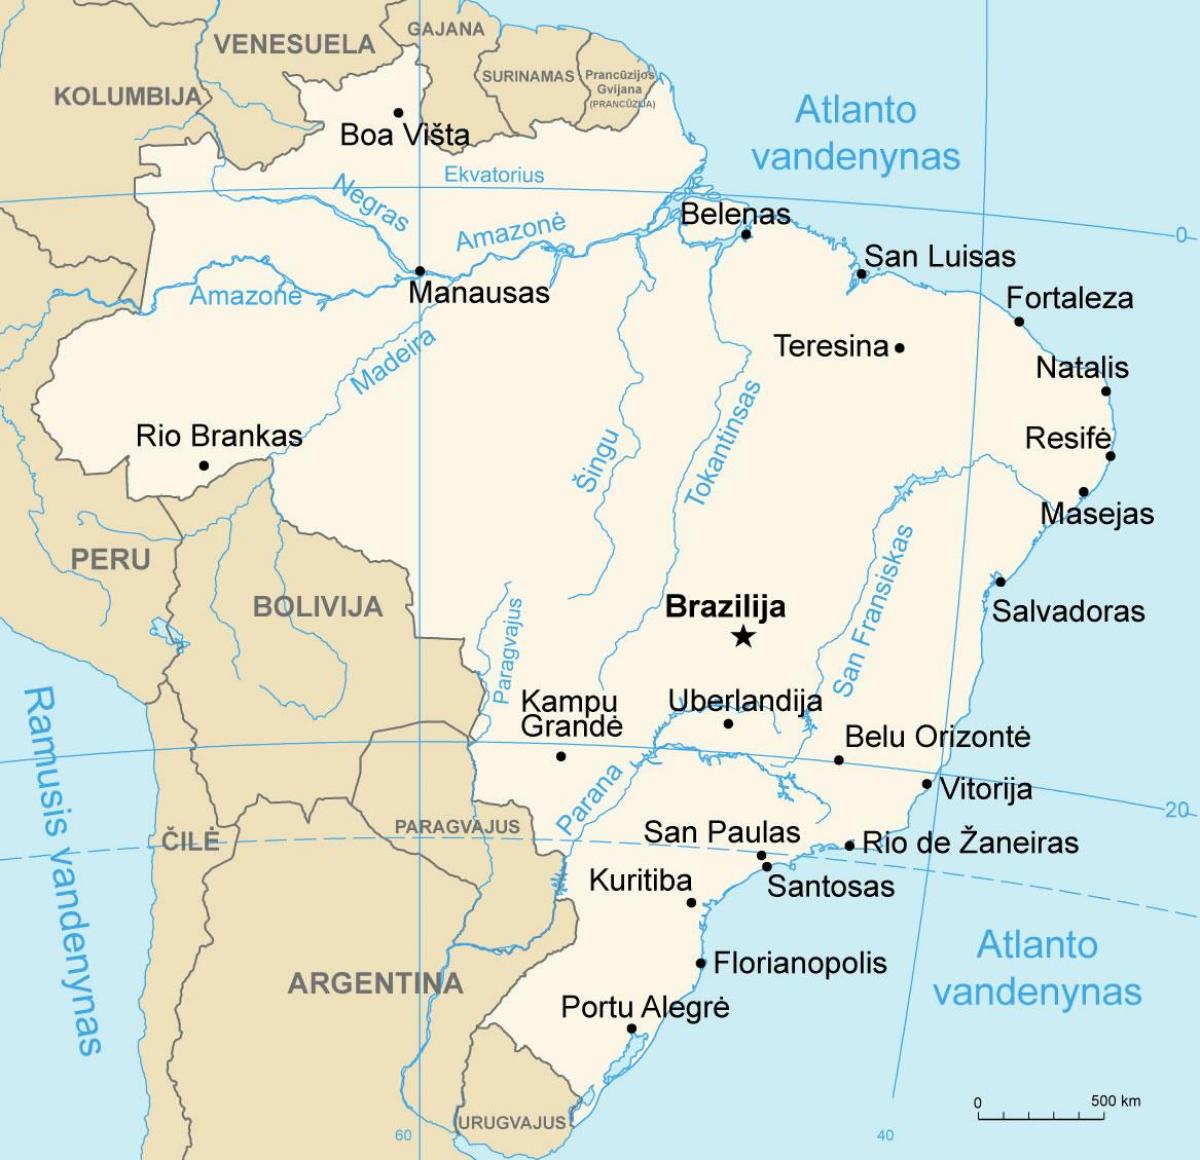 Rivers in Brazil map